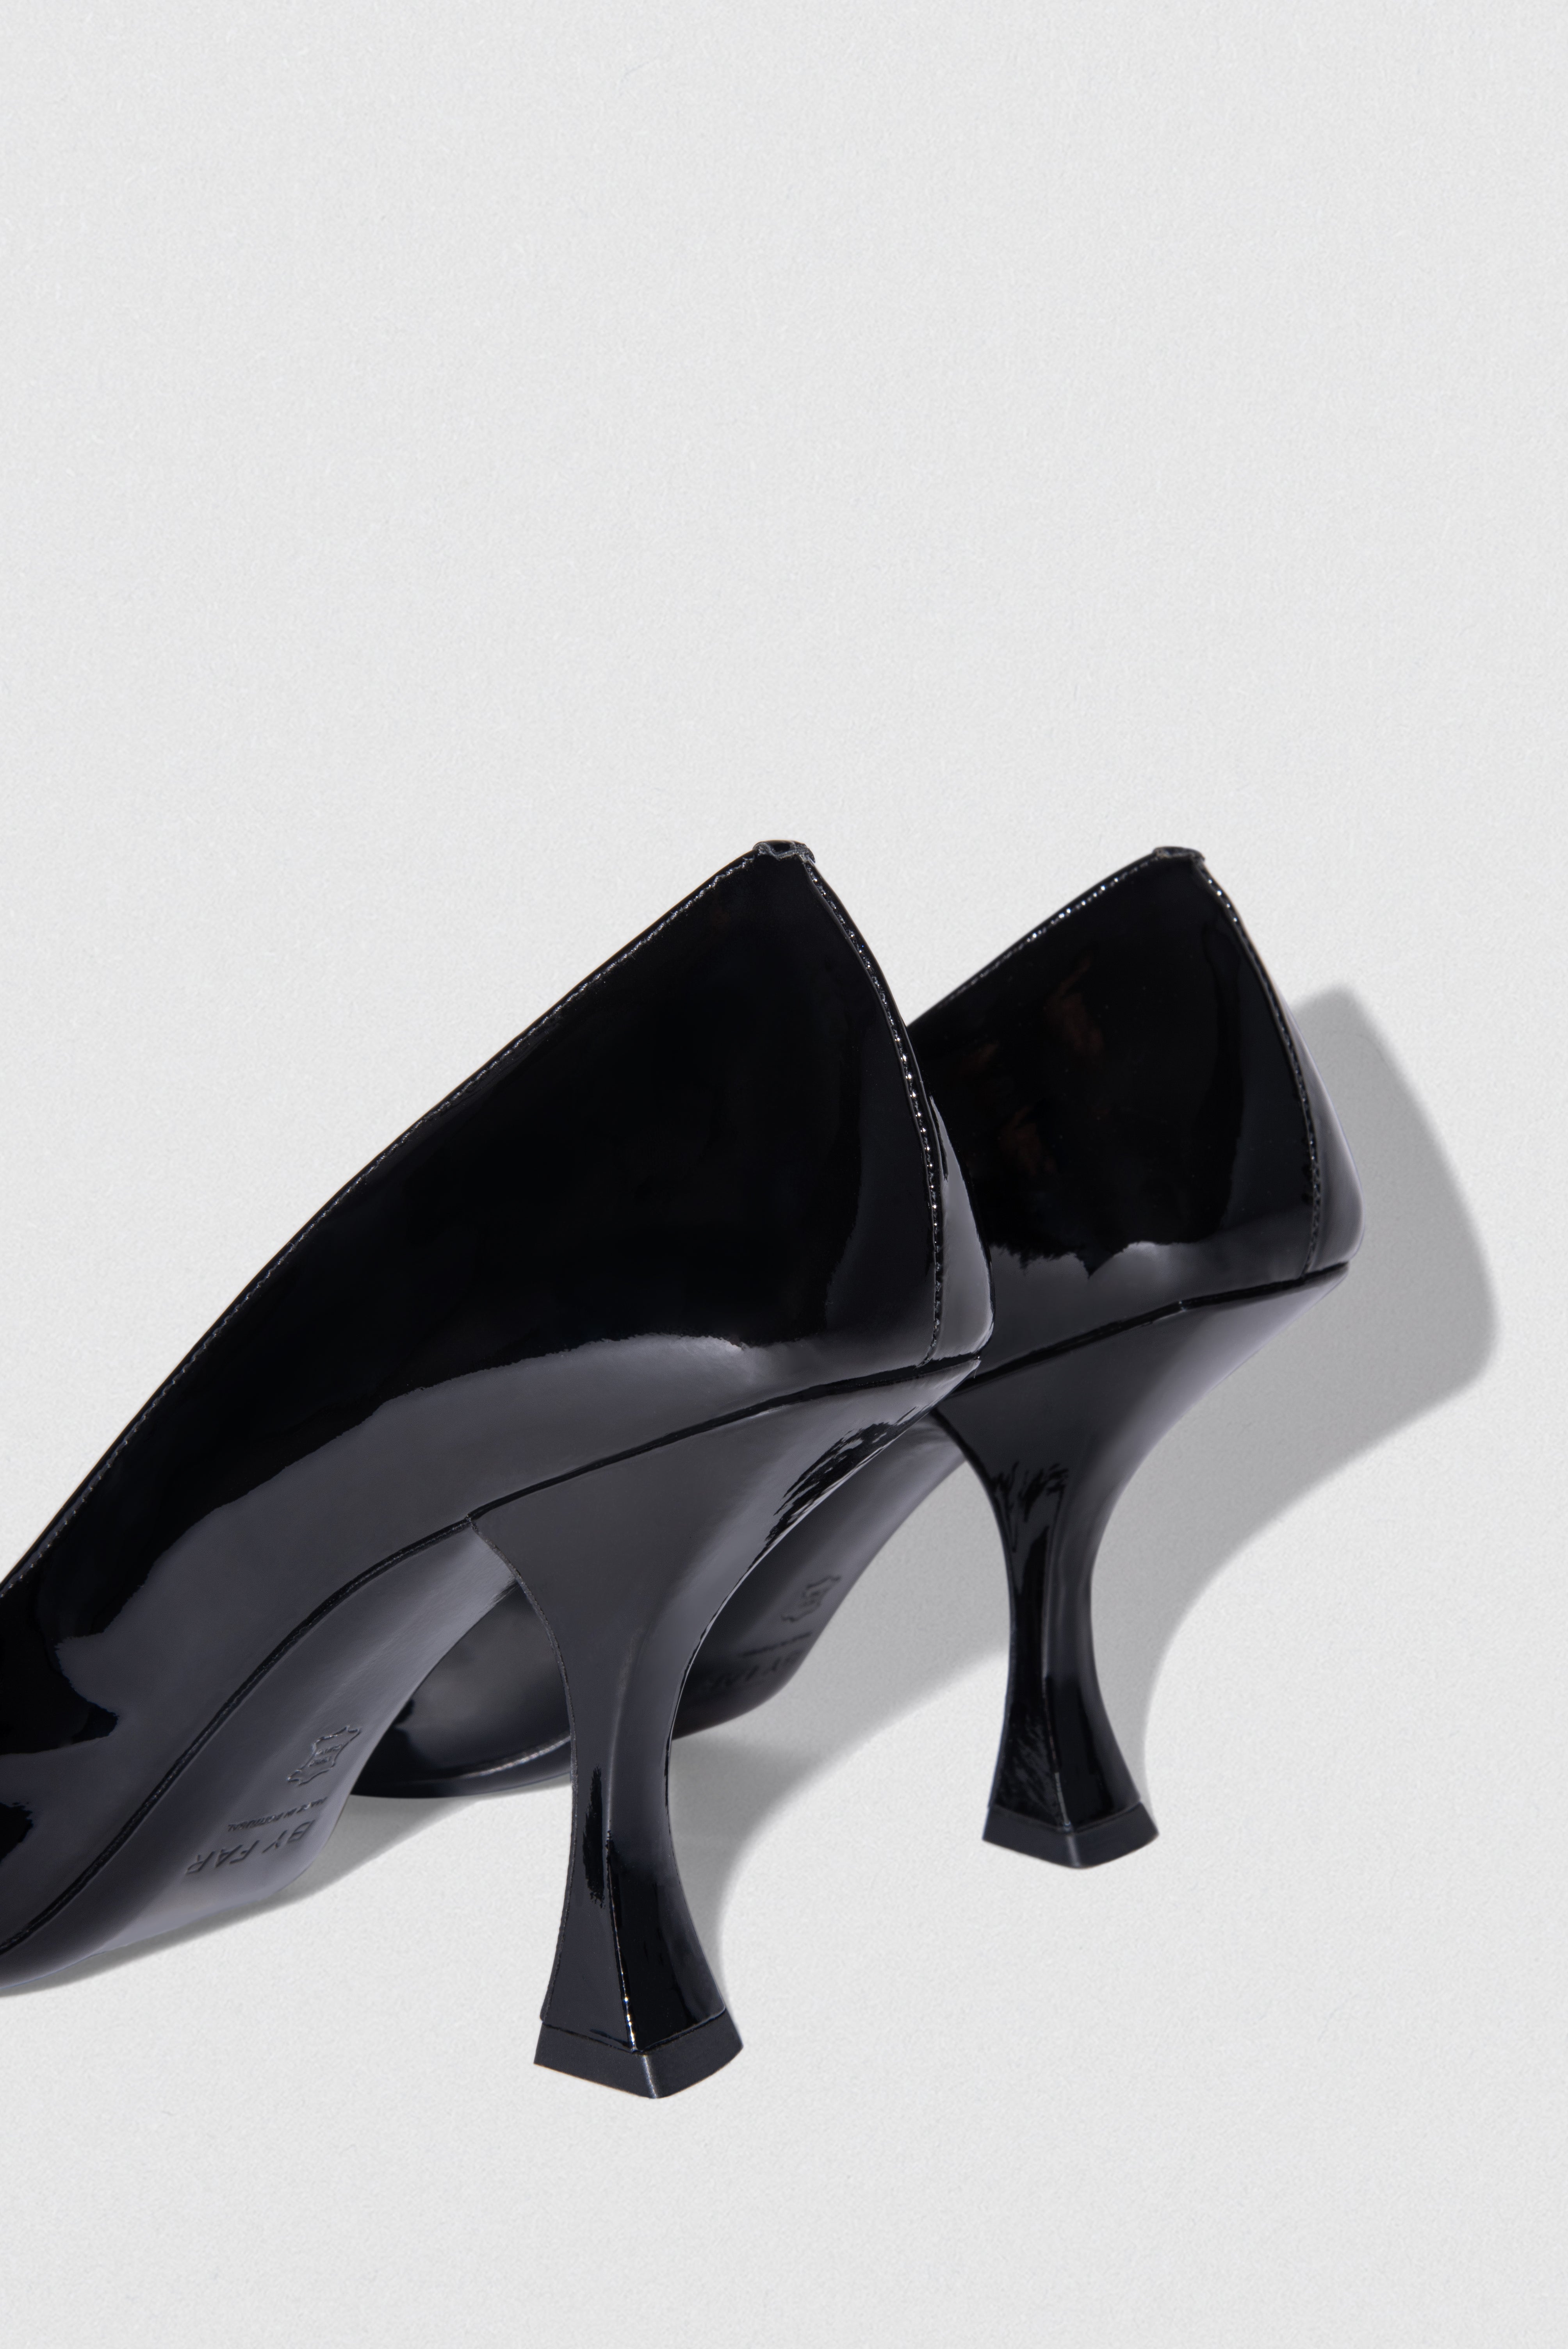 Black platform 6 inch high heel shoes - Super X Studio